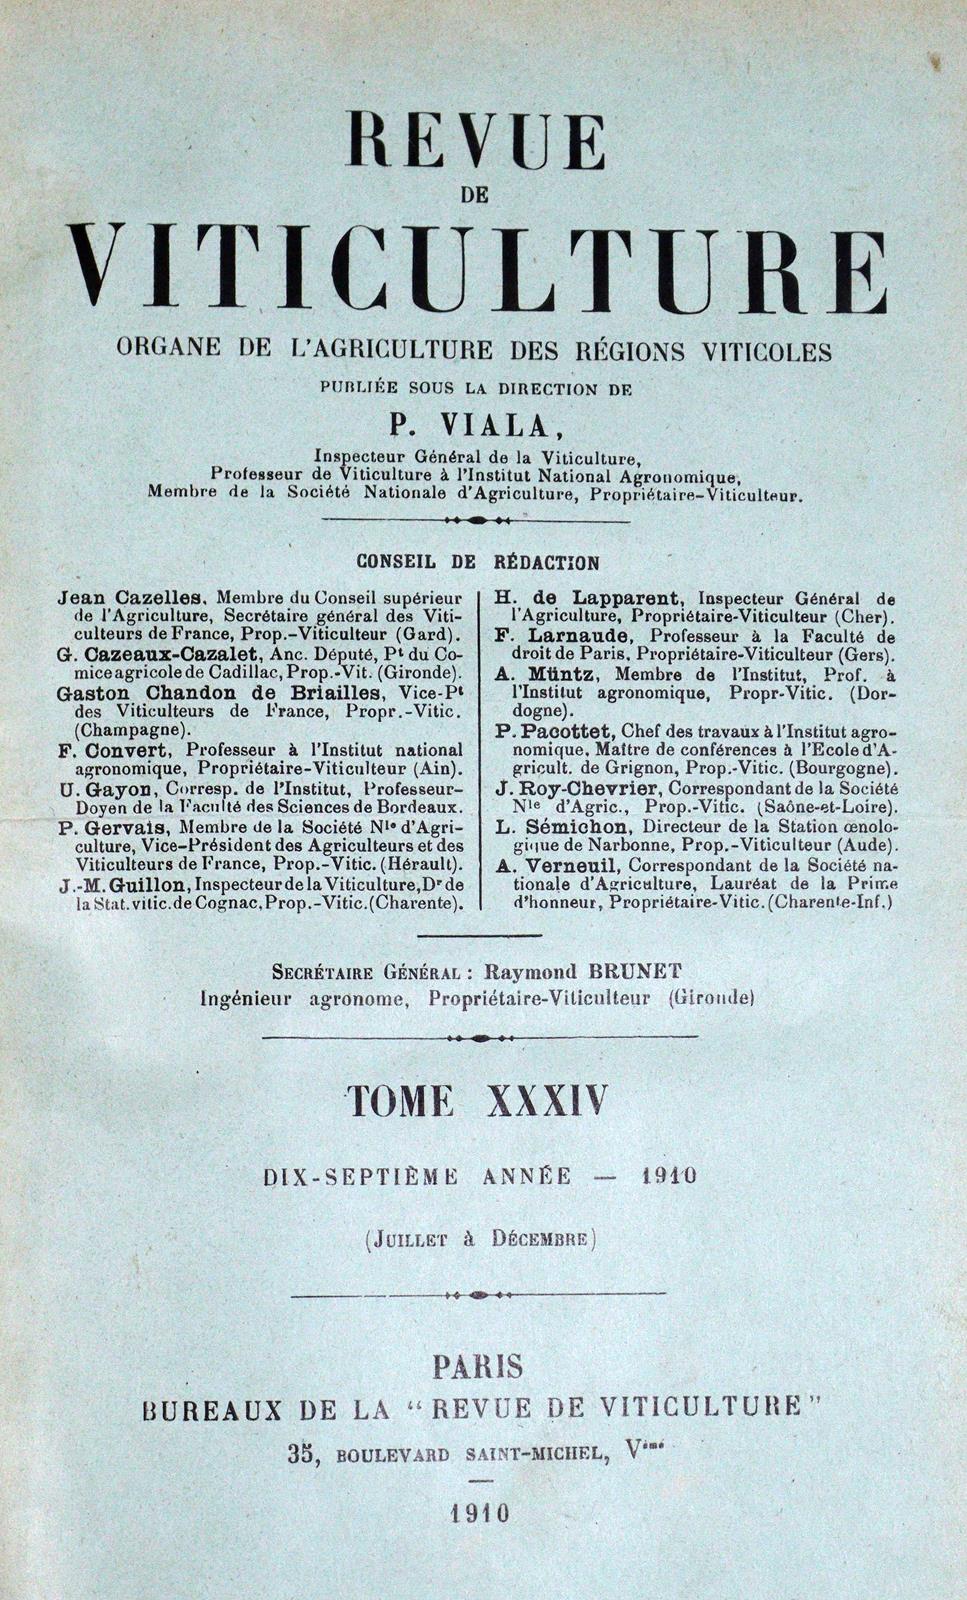 Revue de Viticulture. - Image 2 of 3